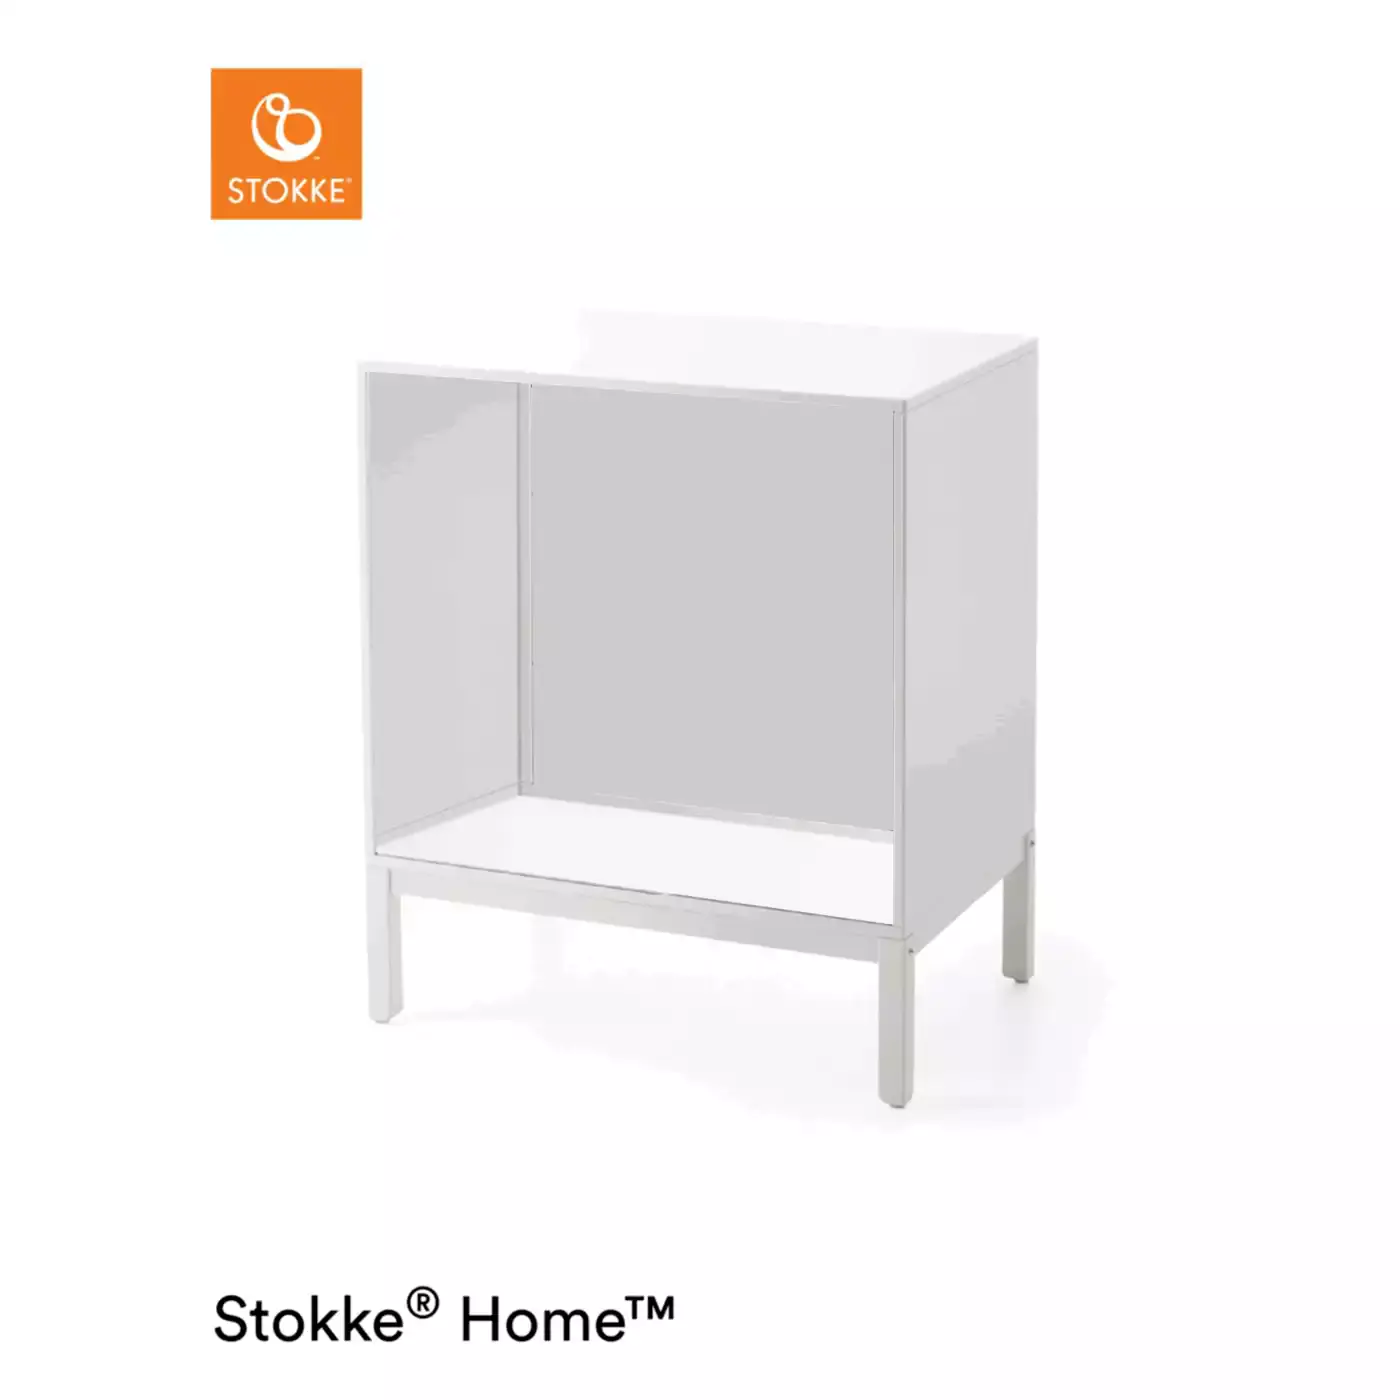 Home™ Dresser White Box 1 STOKKE 2000565853309 1